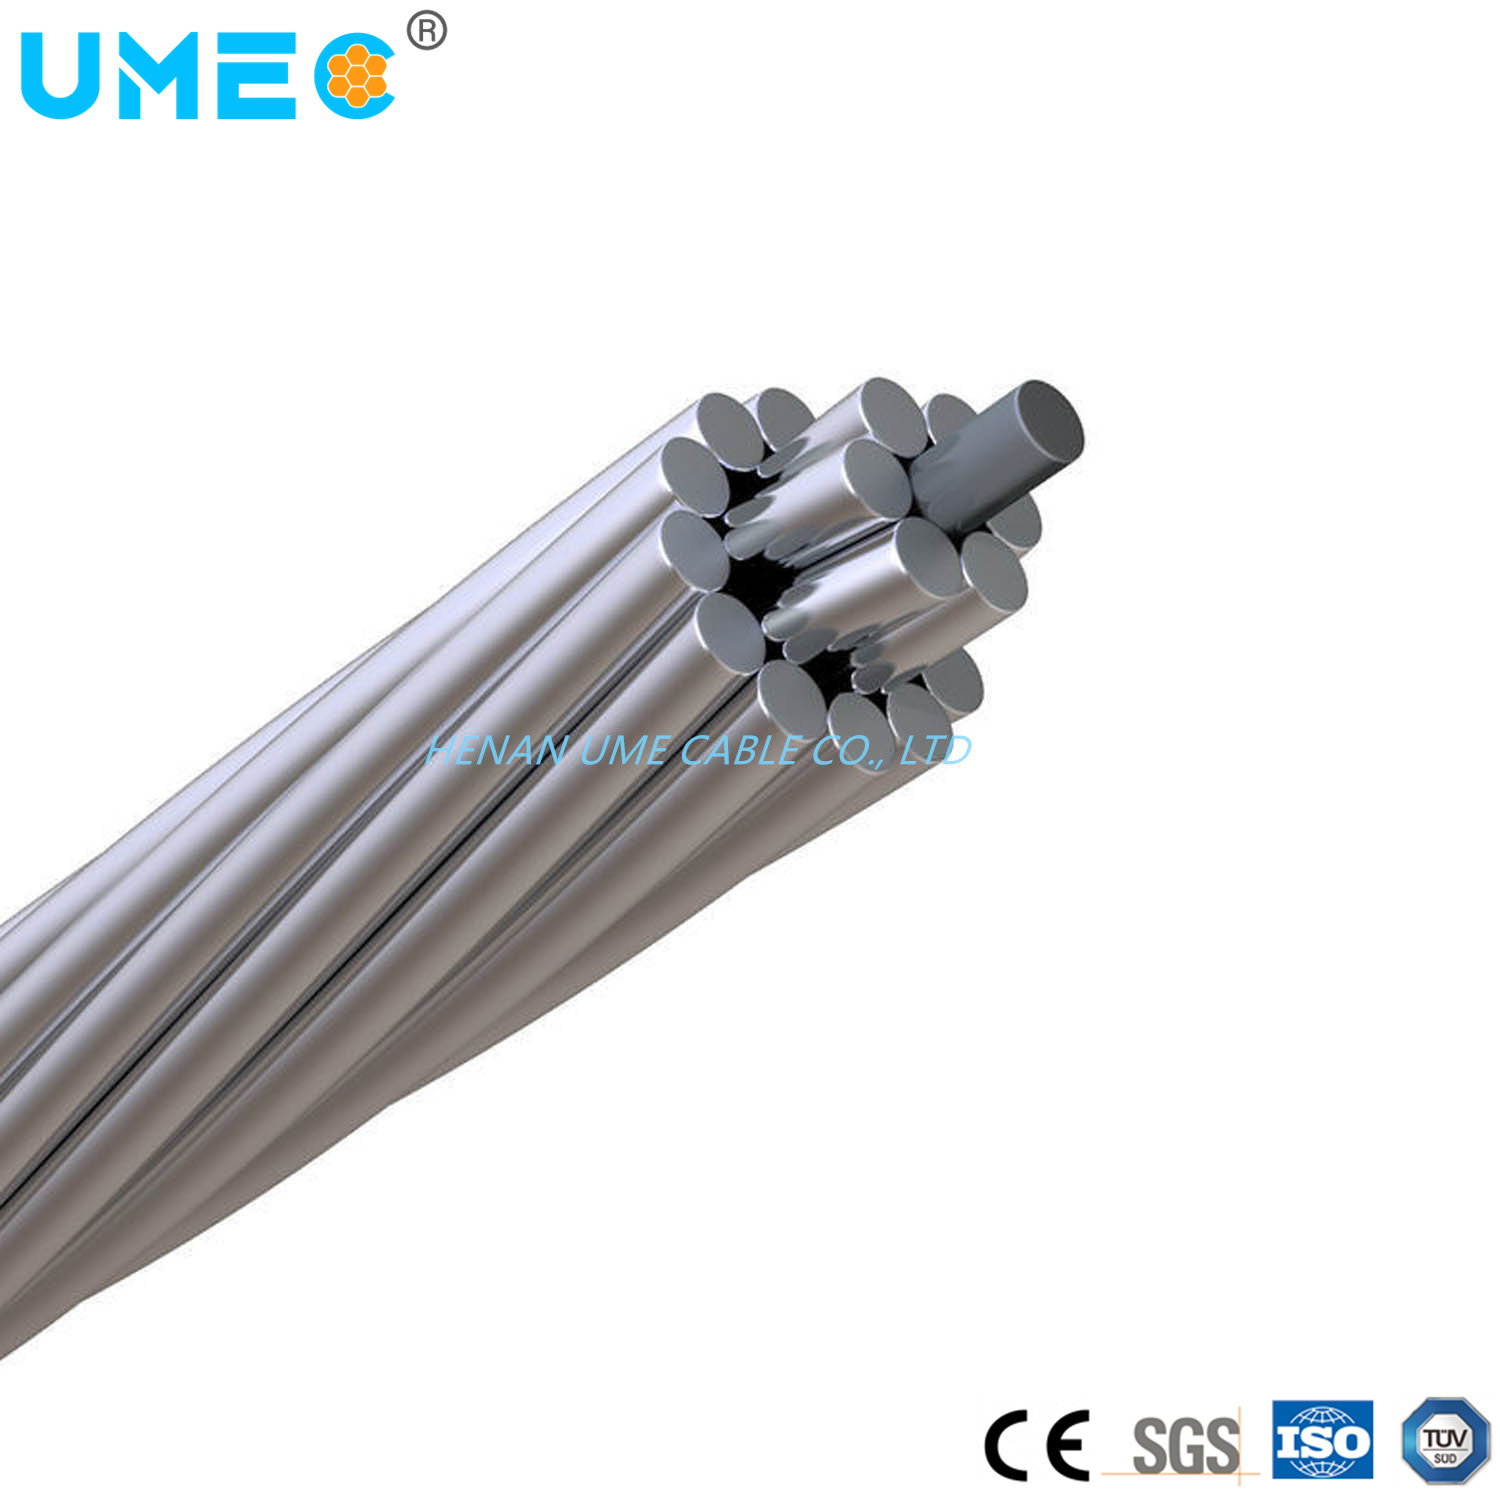 Overhead Aluminum Line Bare Conductor Aluminum Conductor Steel Reinforced ACSR/Aw